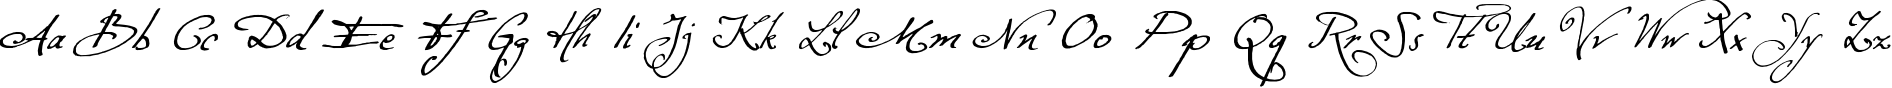 Пример написания английского алфавита шрифтом Excellentia in excelsis